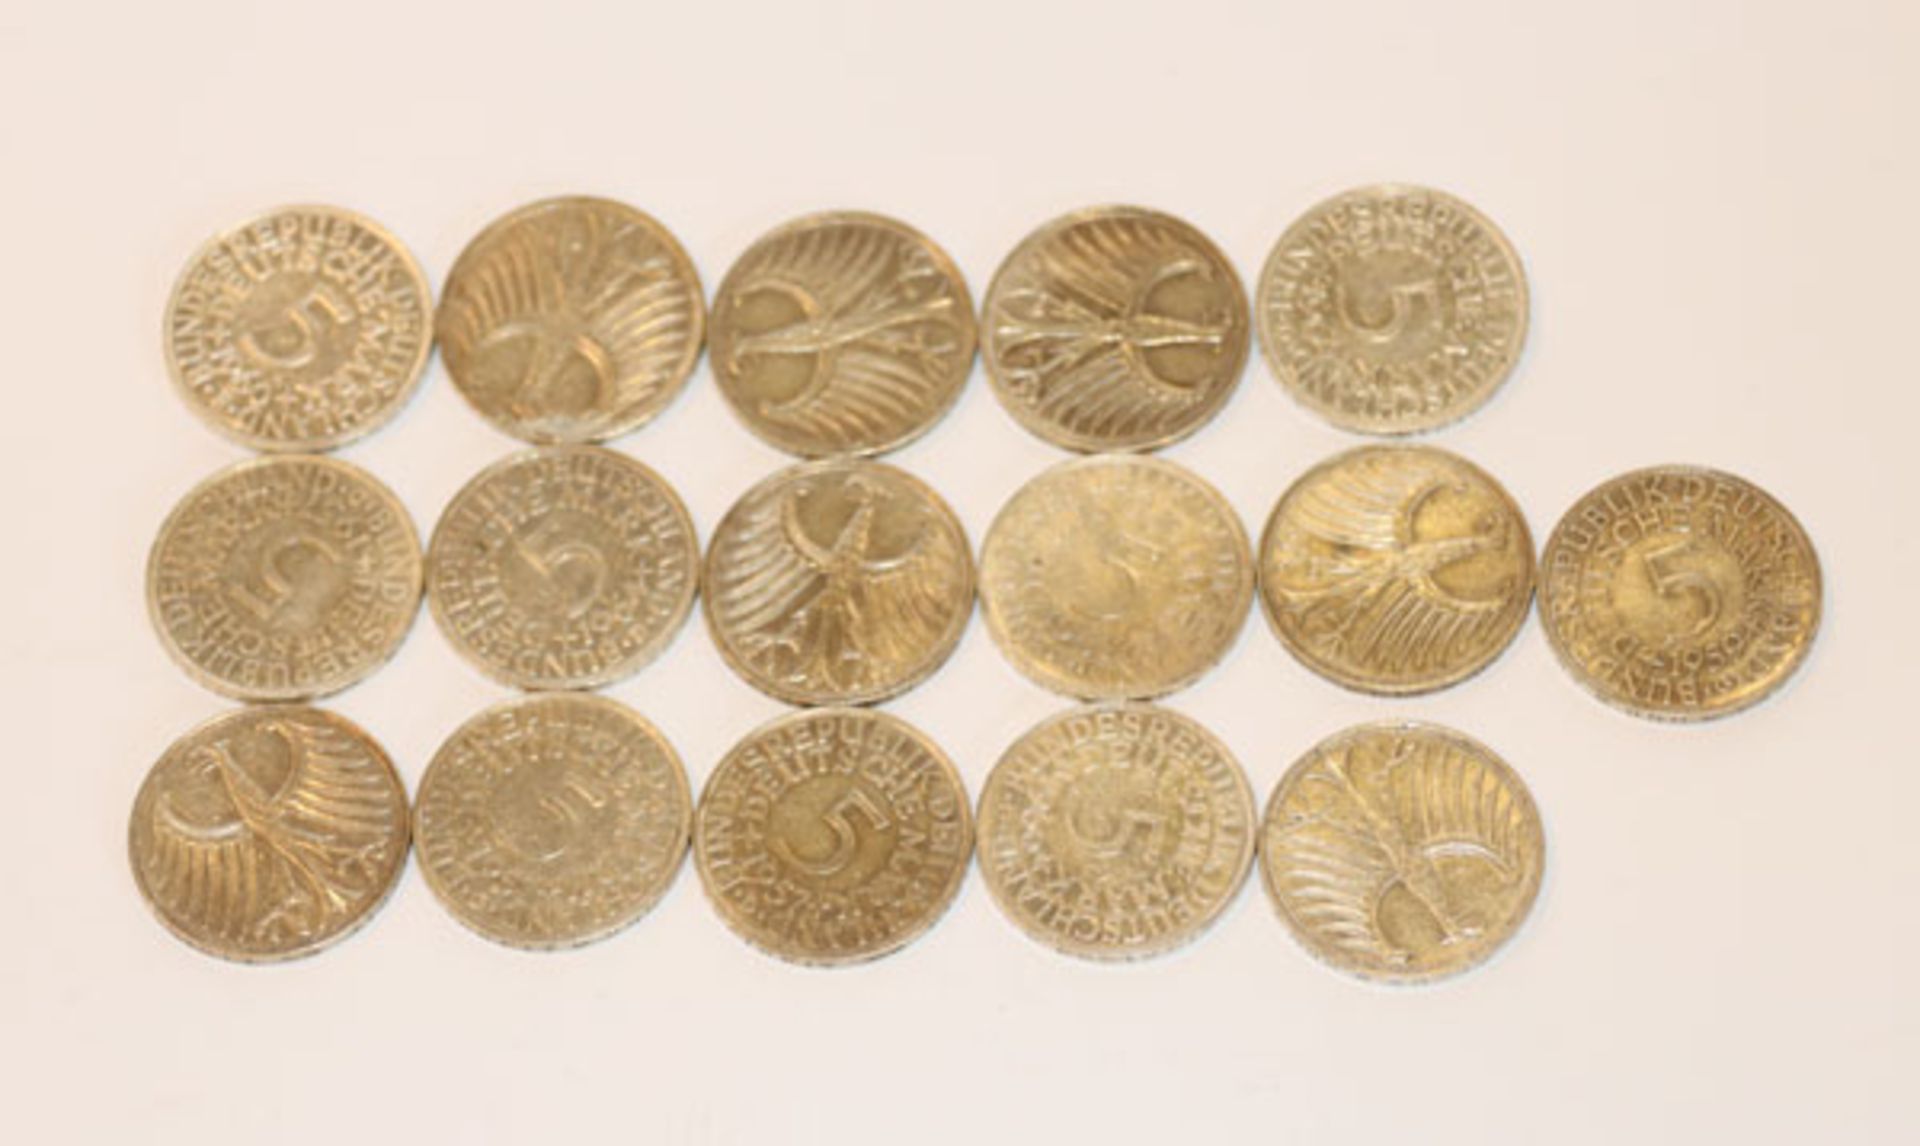 Konvolut von 5 DM Silber Kursmünzen: 2 x 1957 D, 2 x 1957 G, 5 x 1959 D, 1 x 1959 G, 2 x 1960 F, 1 x